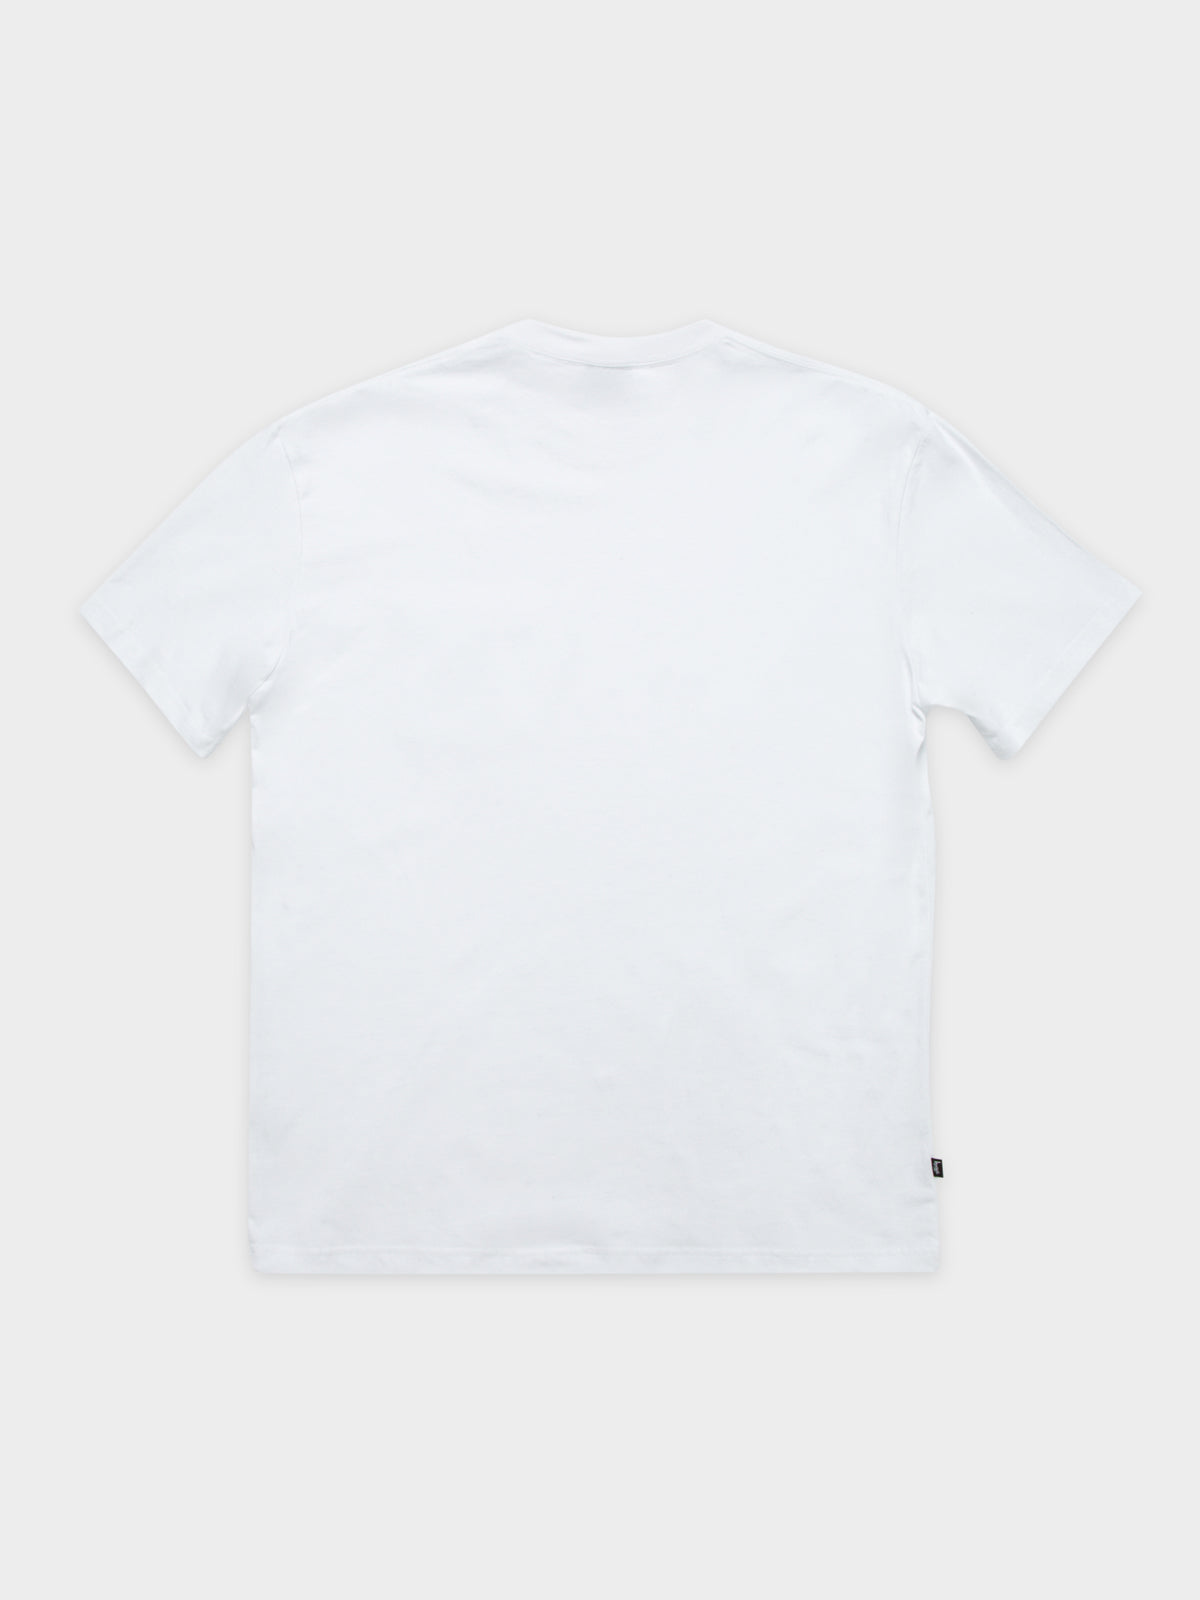 Work Label Pocket Short Sleeve T-Shirt in White